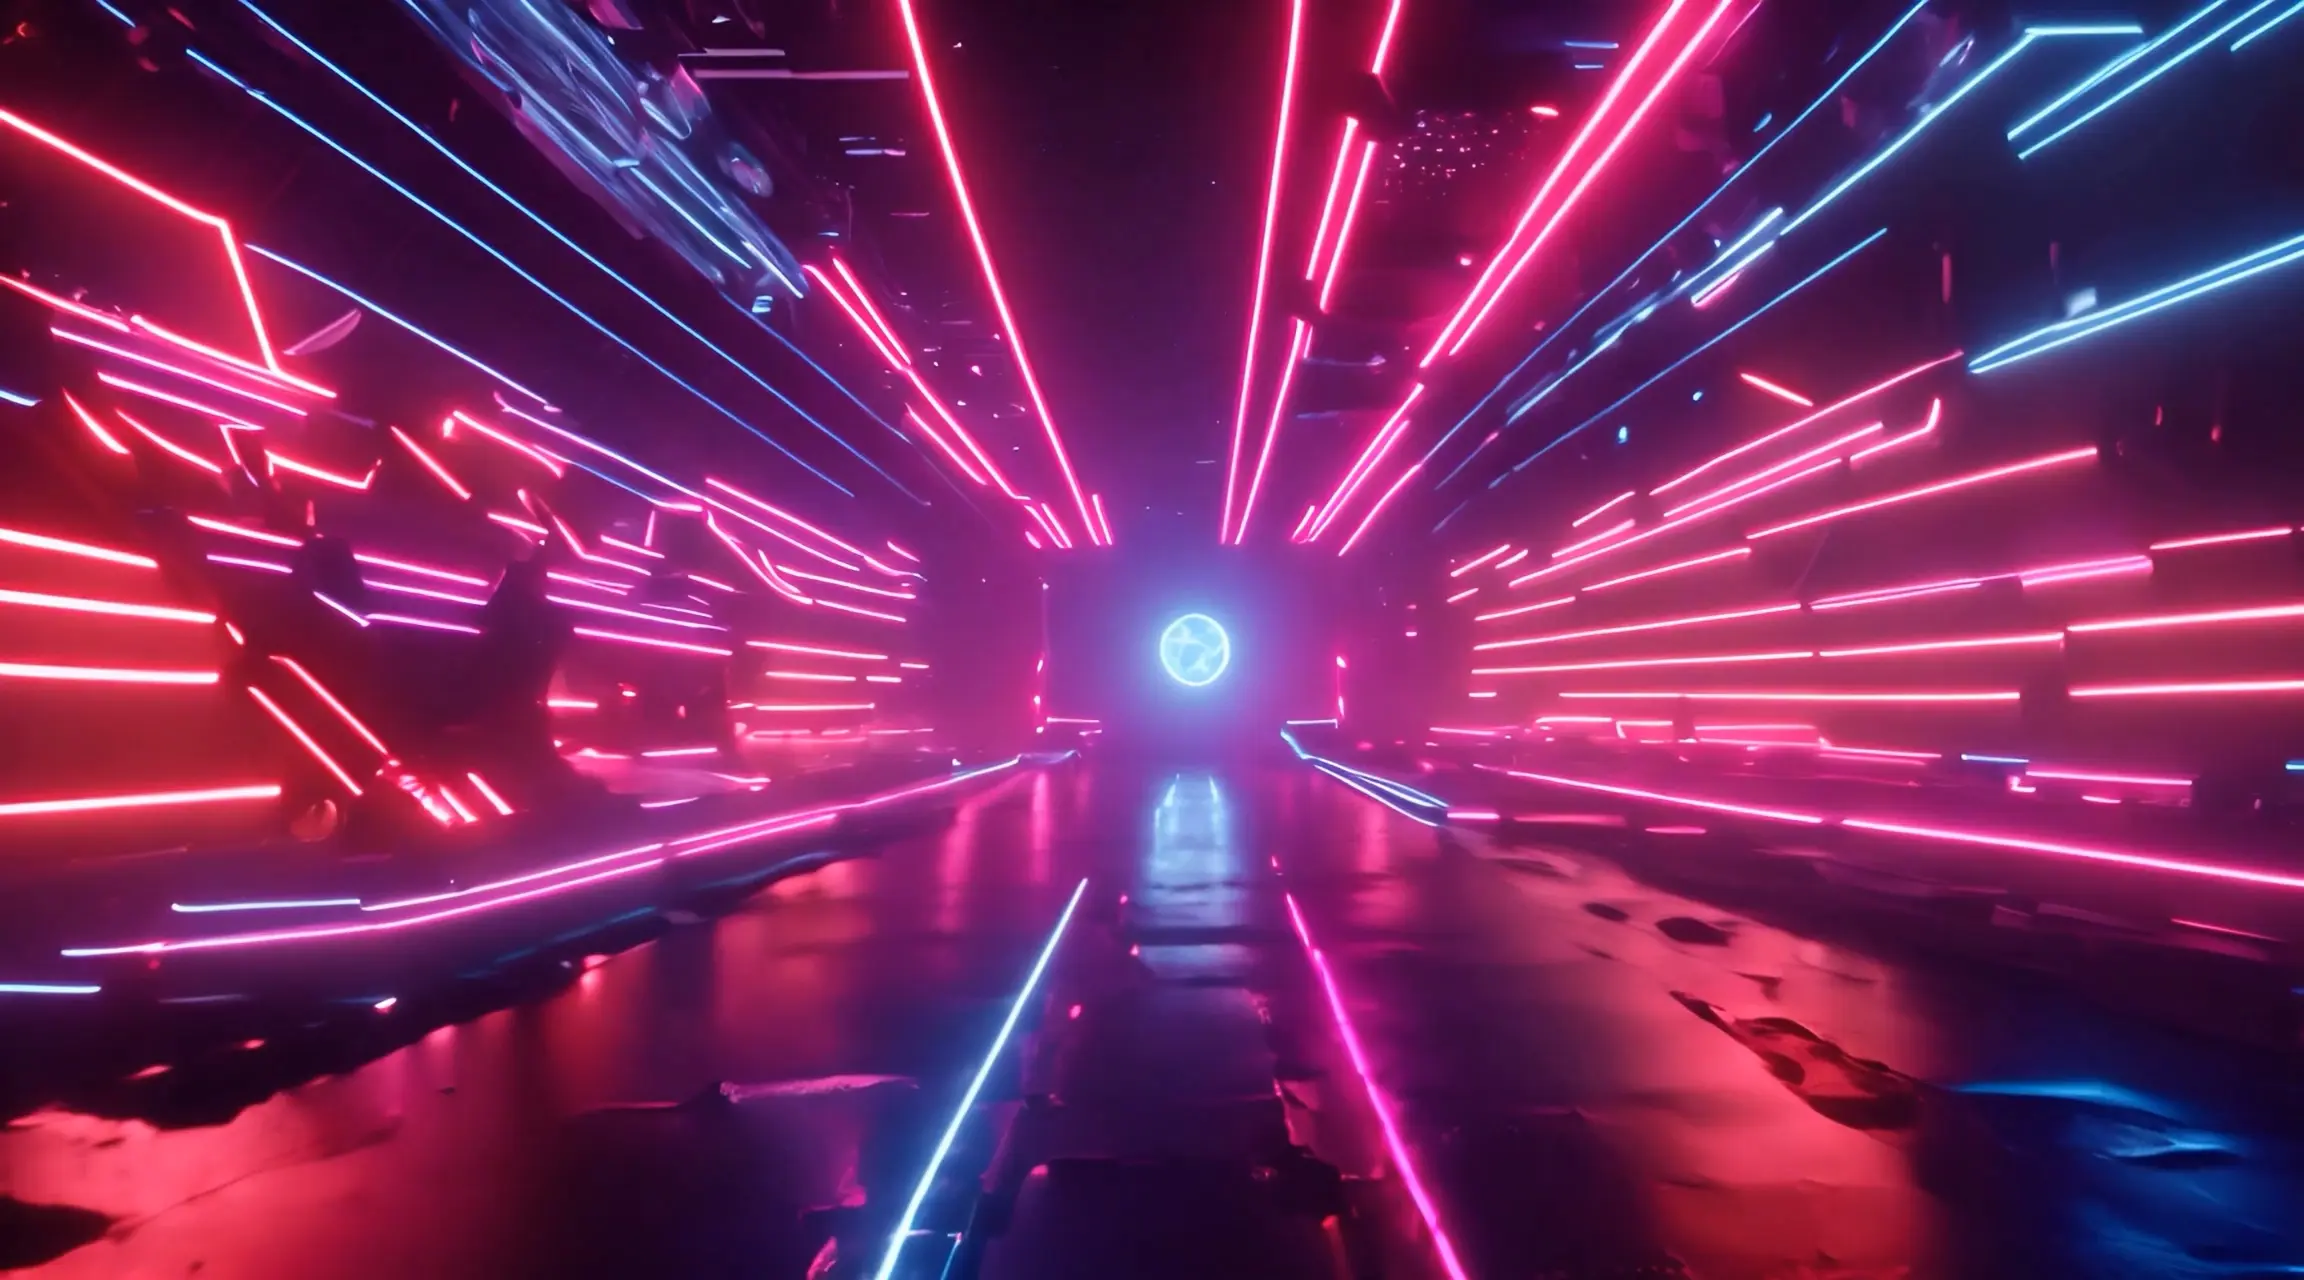 Hyperdrive Hallway Sci-Fi Neon Passage Video